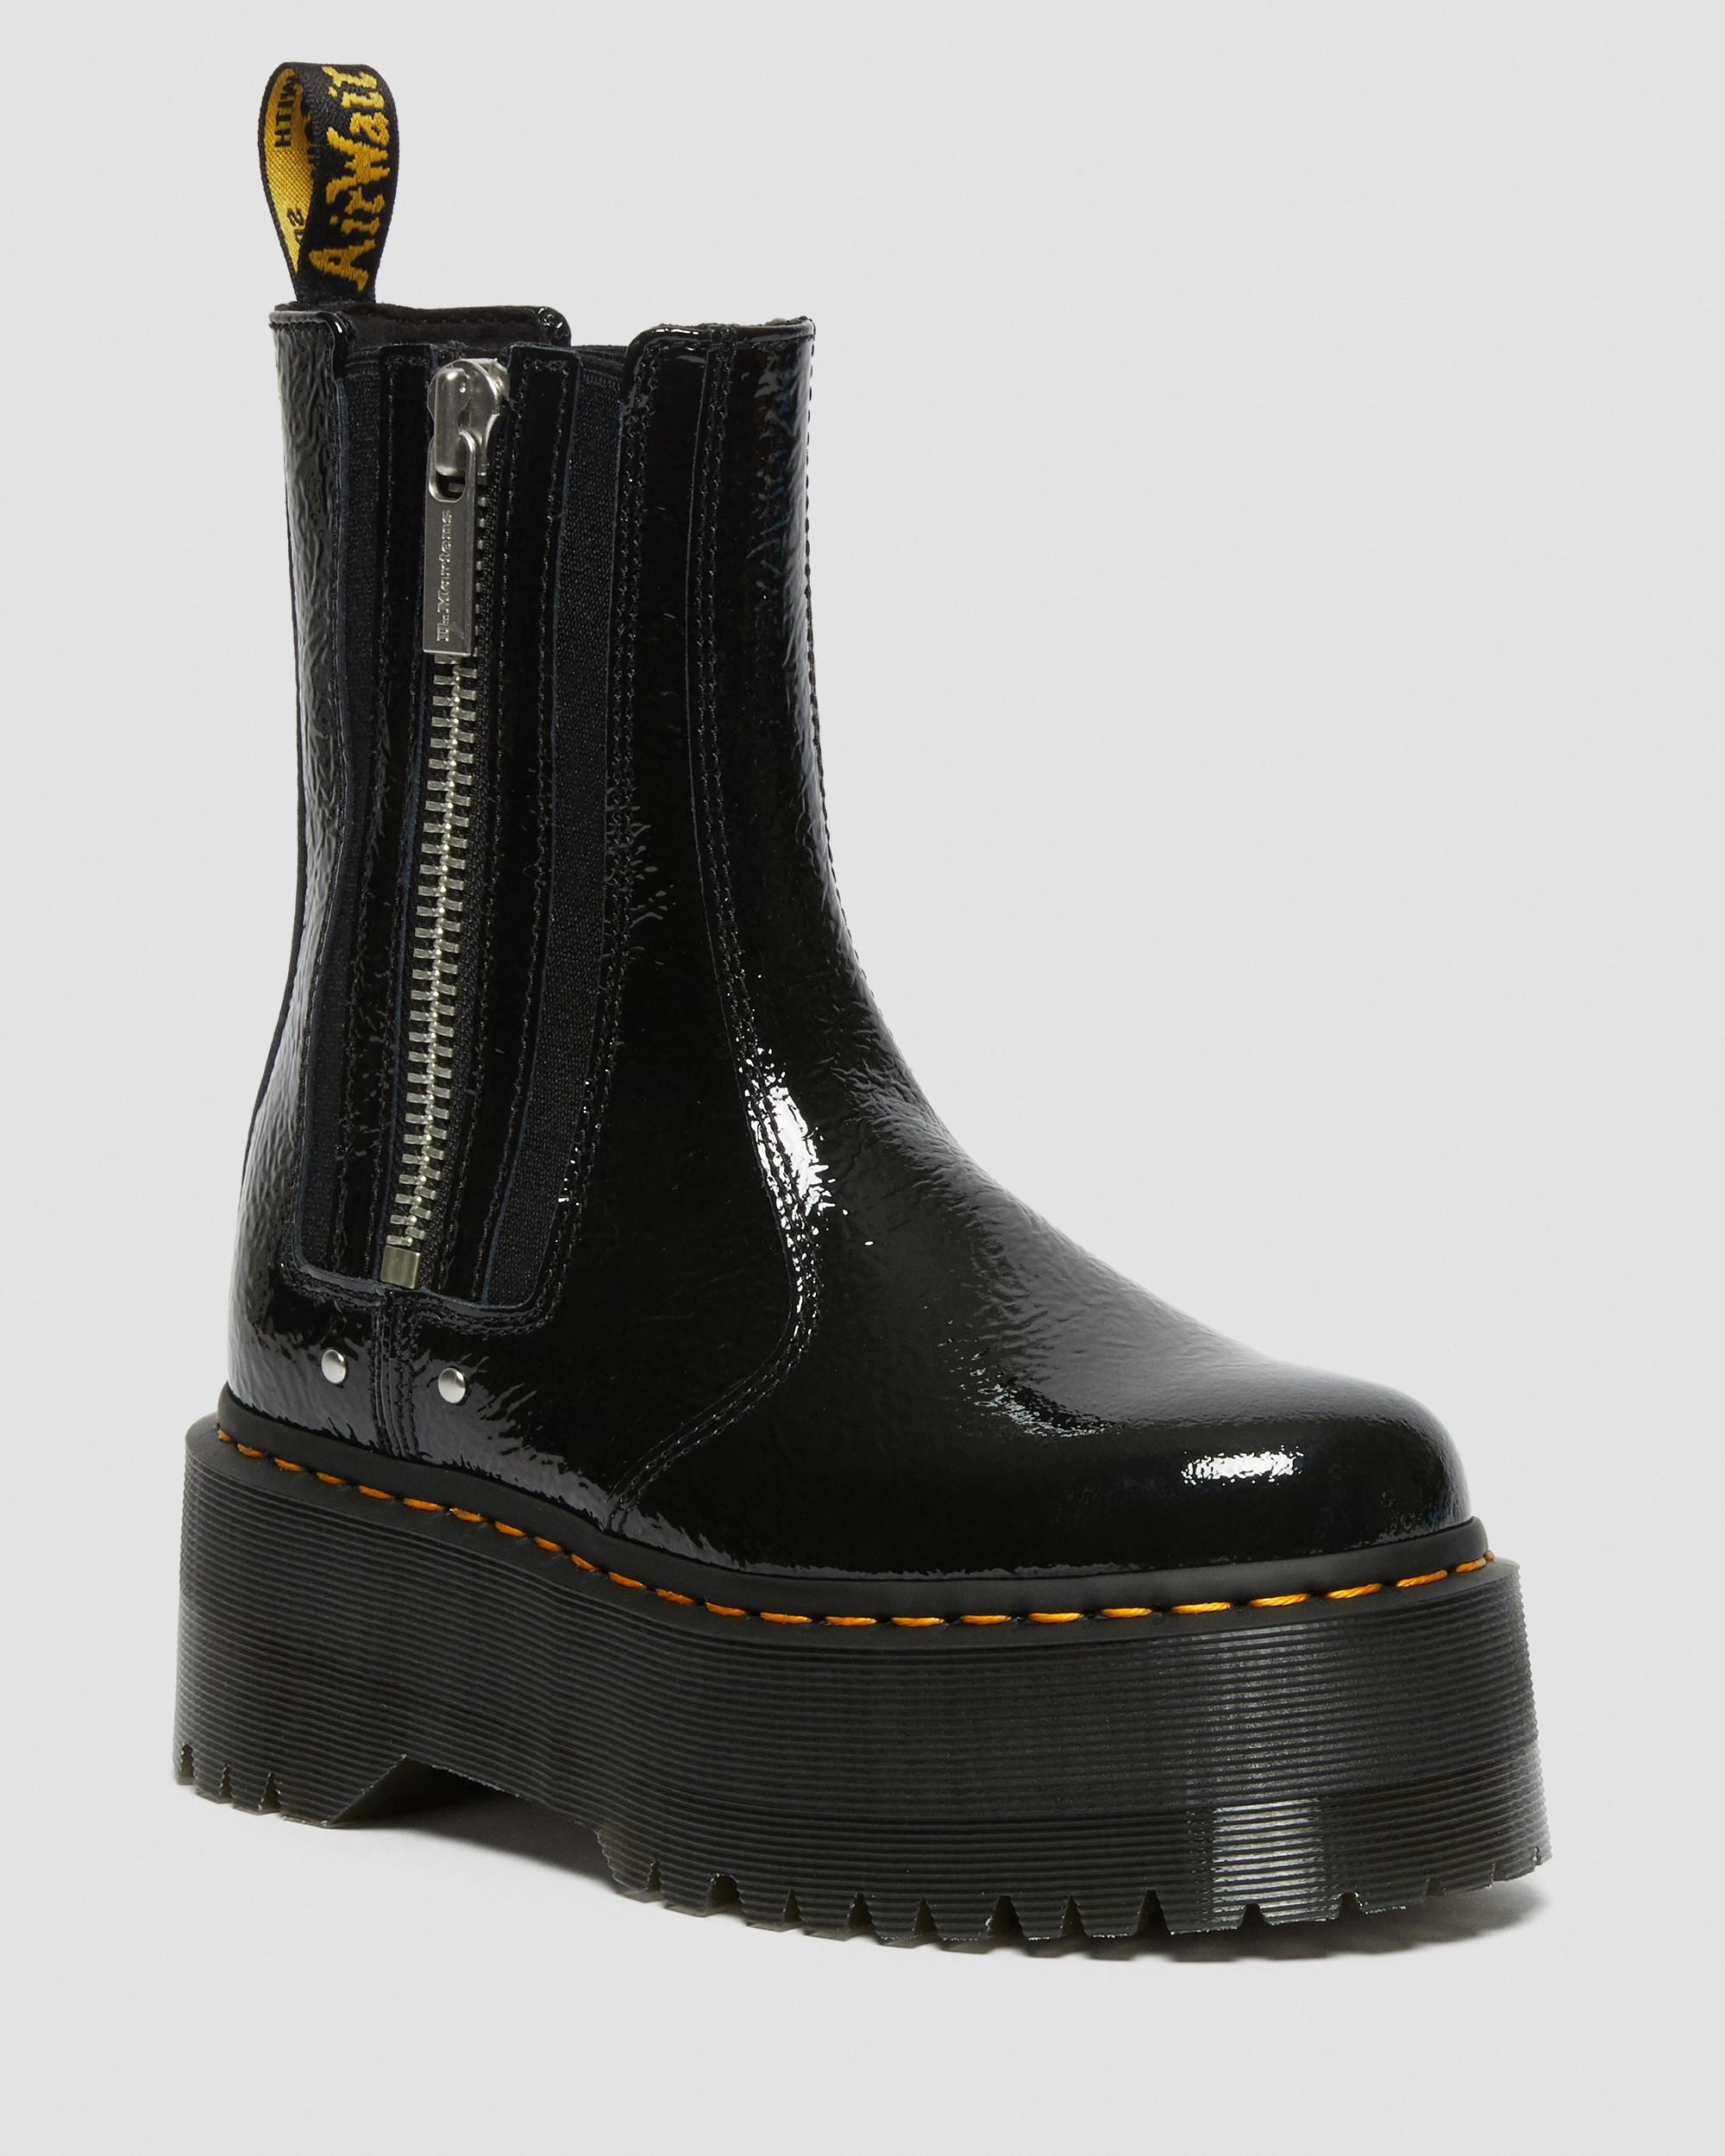 Aanbevolen grond ondergoed 2976 Max Distressed Patent Chelsea Platform Boots | Dr. Martens